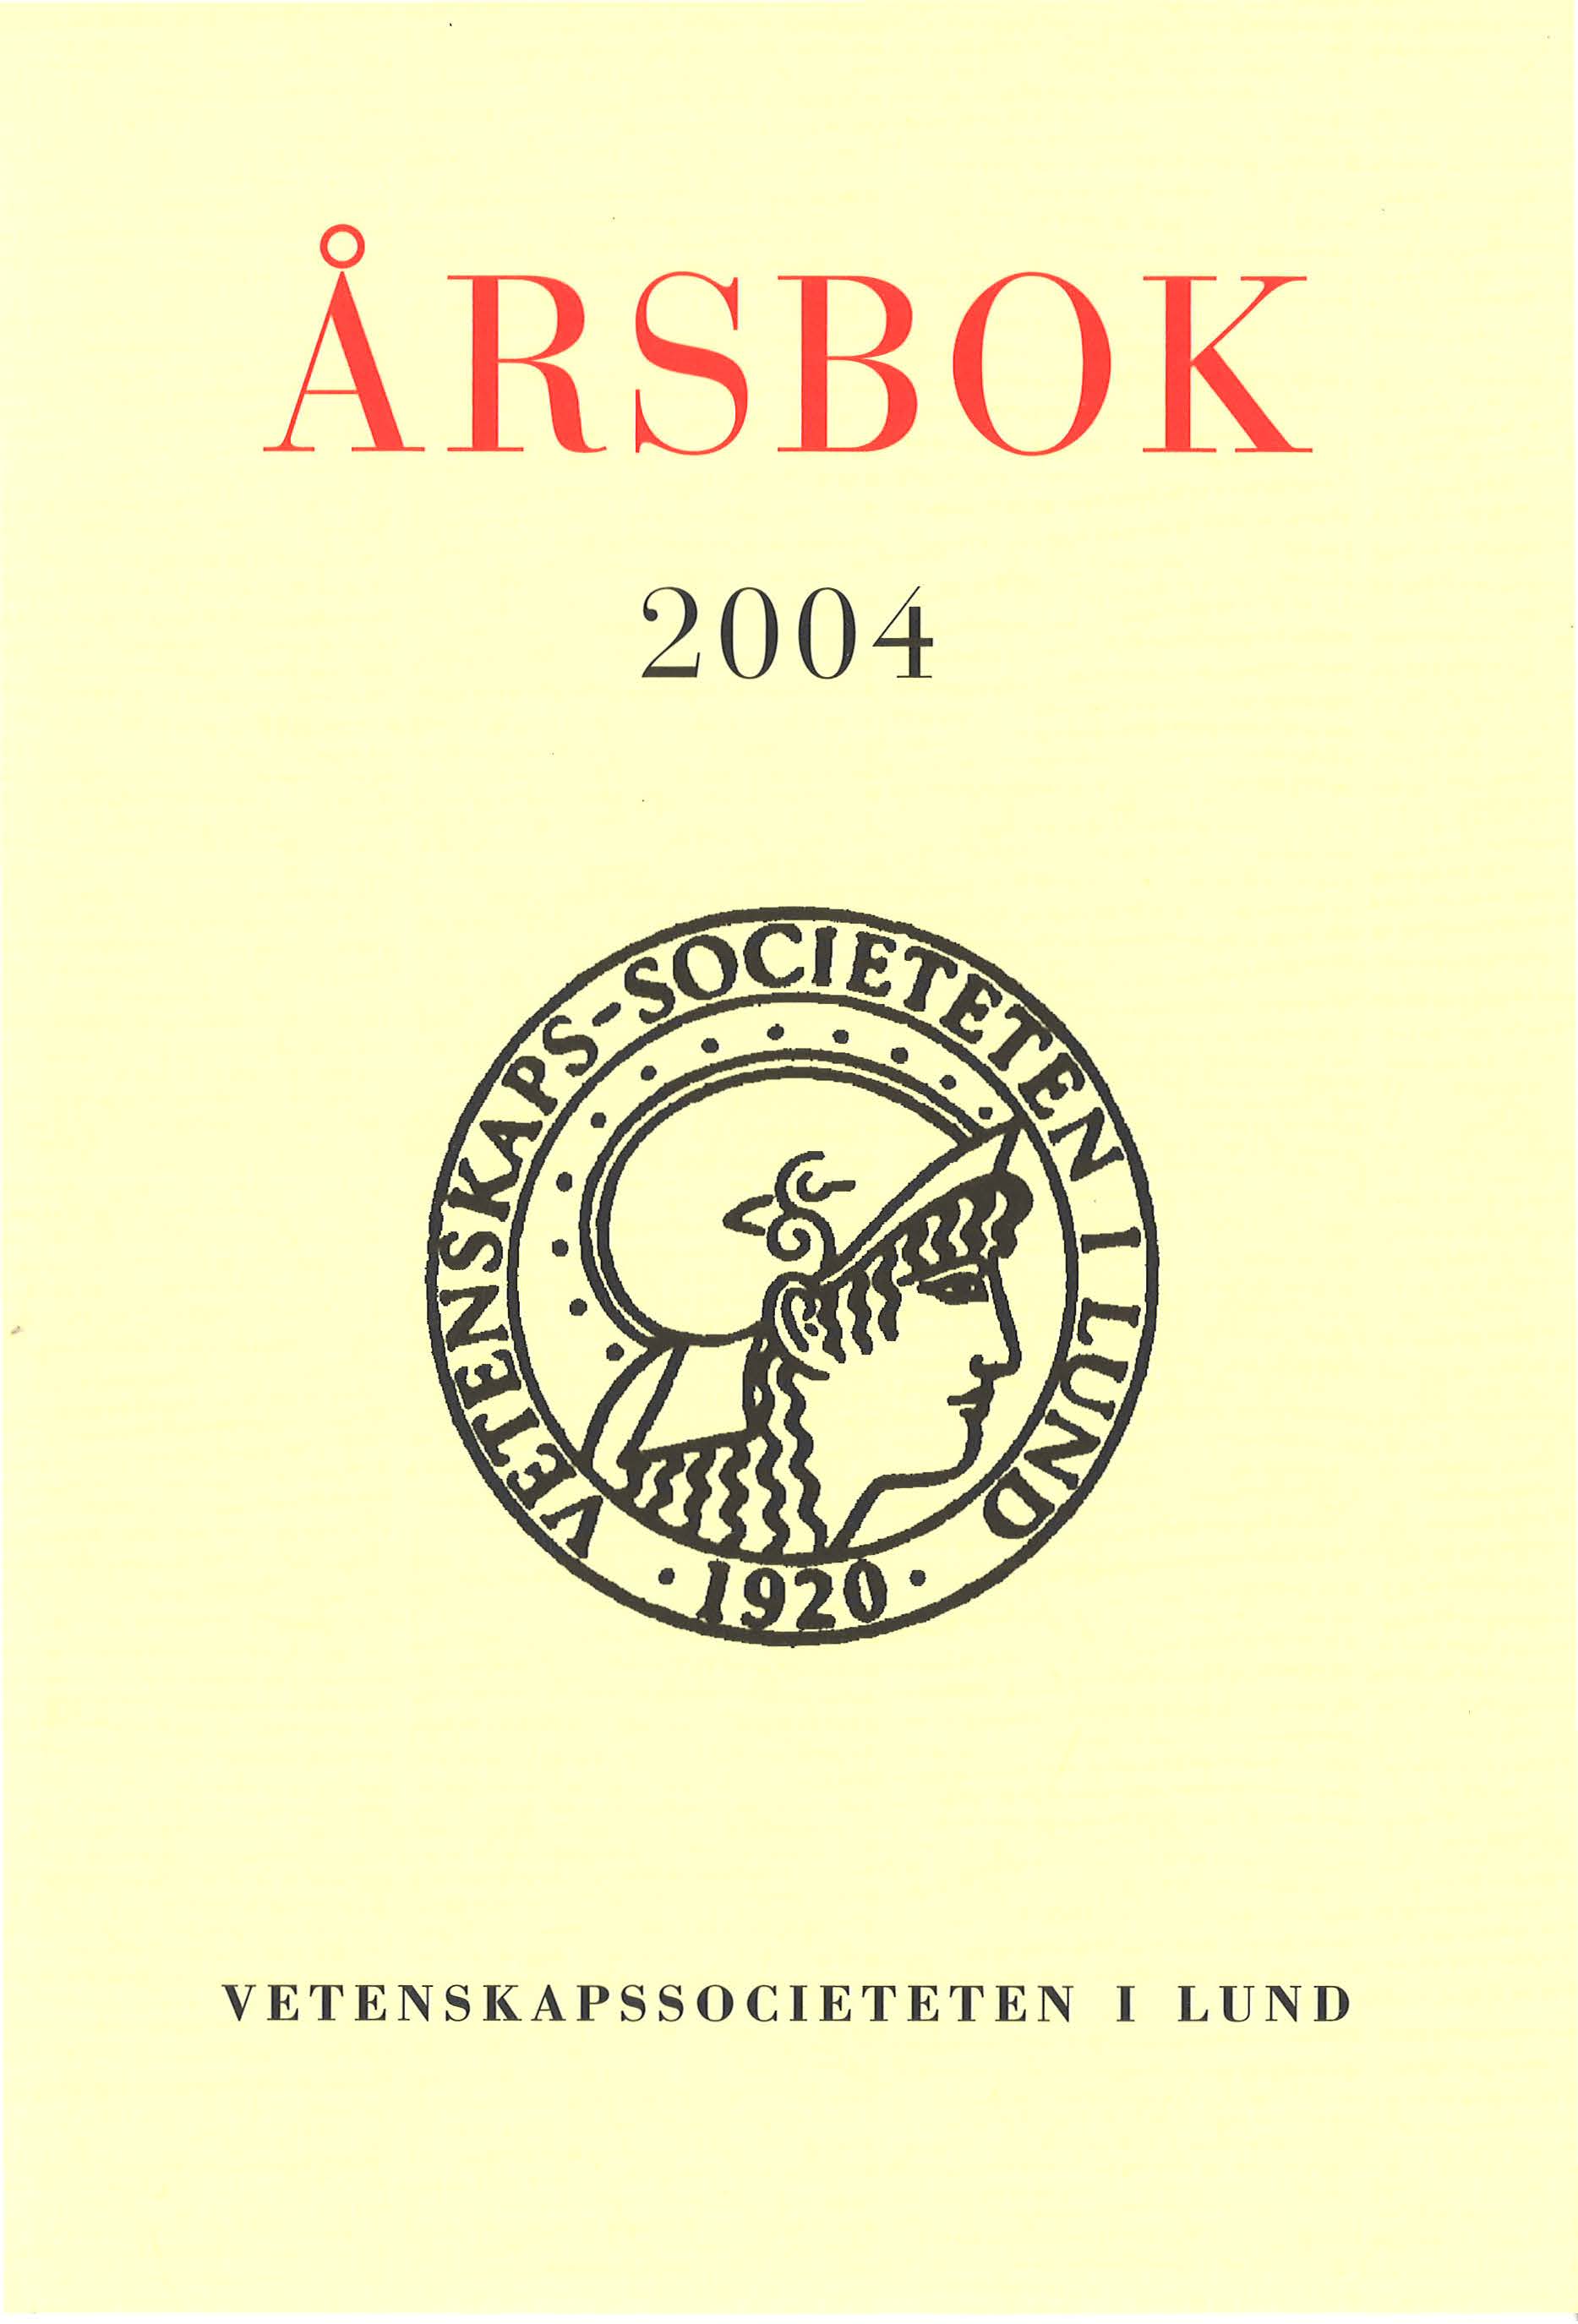 					Visa Årsbok 2004
				